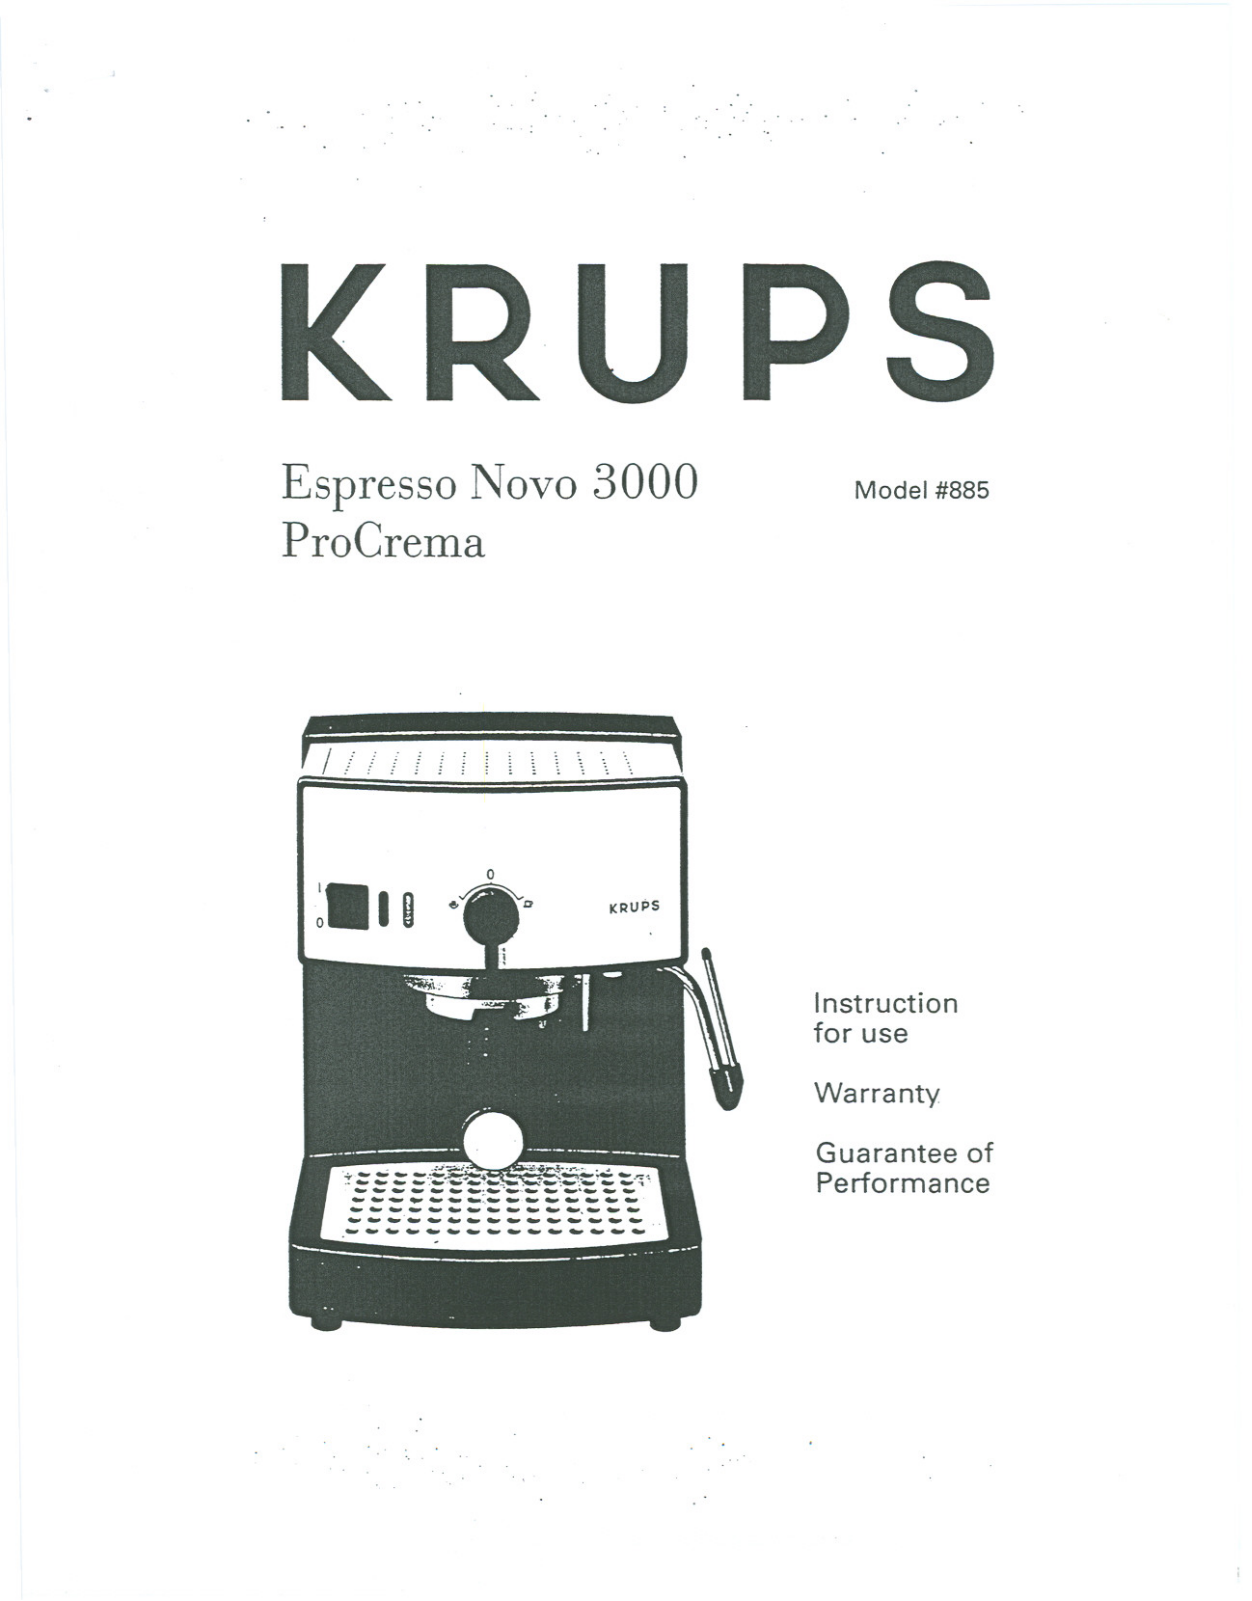 Krups ESPRESSO NOVO 3000 PROCREMA, 885 Manual